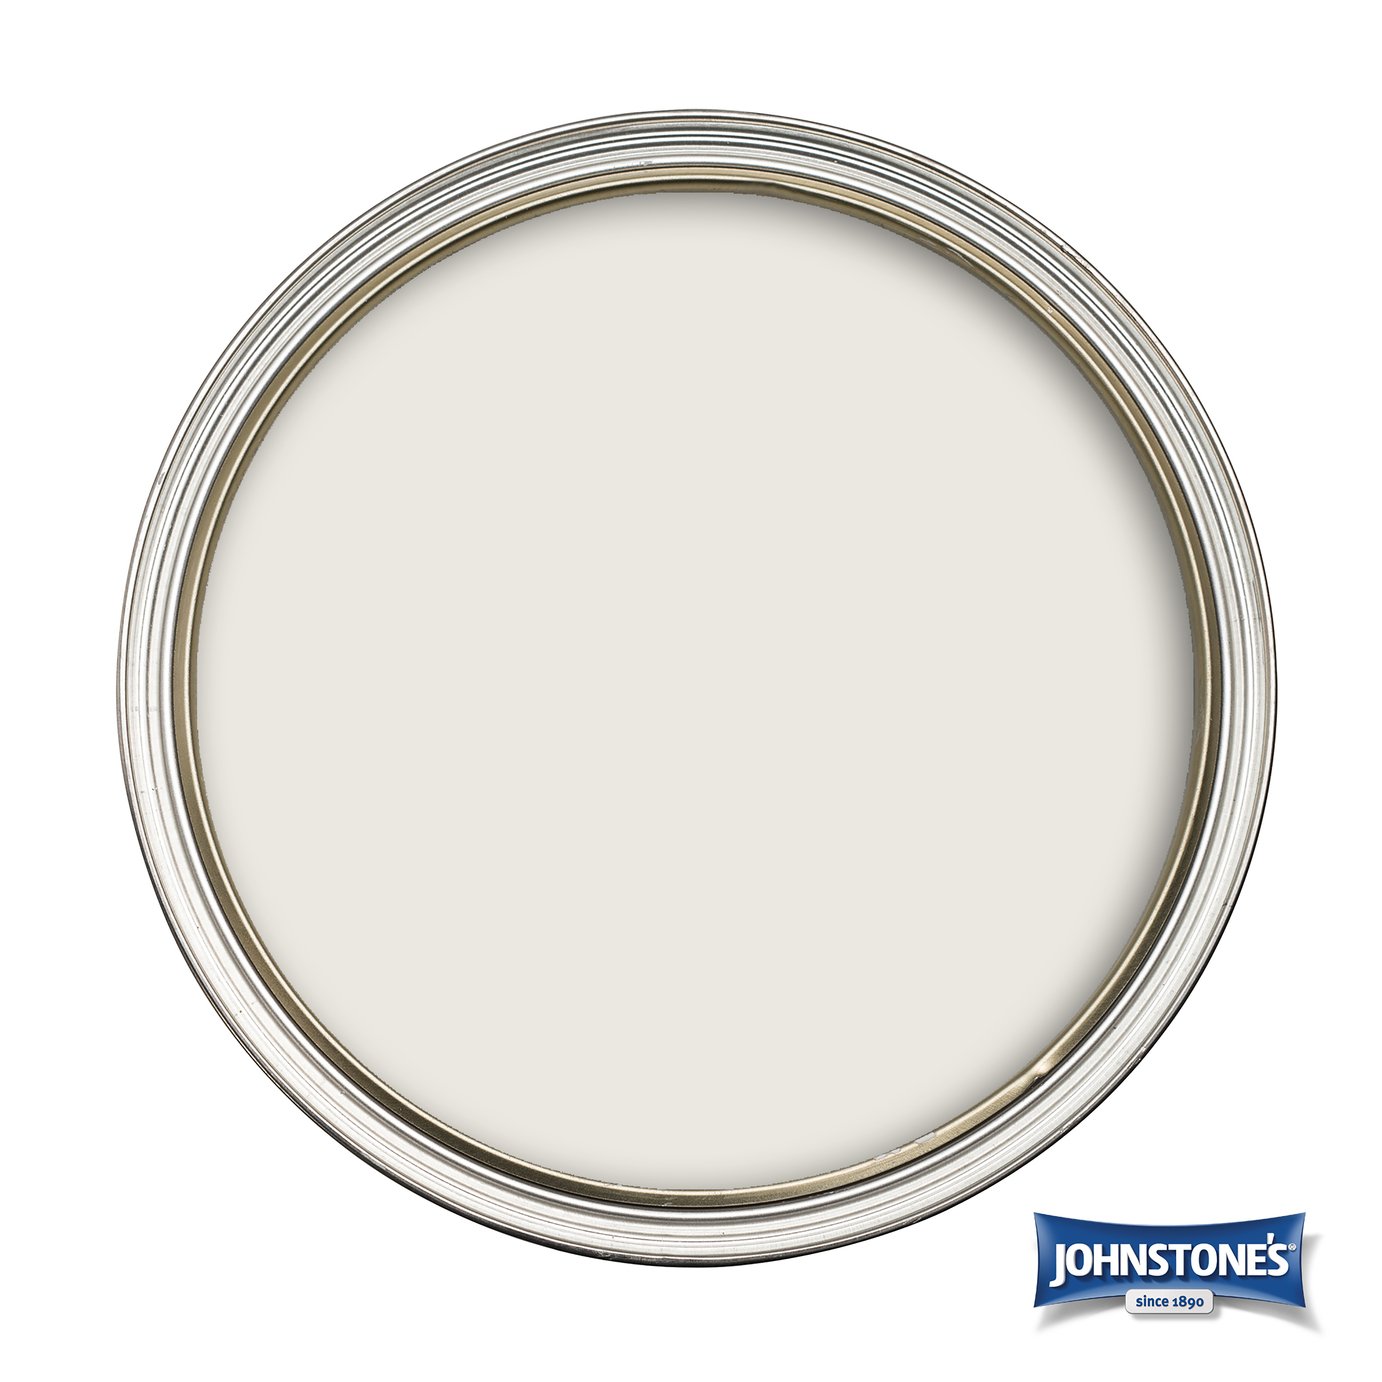 Johnstones Silver Feather Bathroom Emulsion Paint 2.5L Review